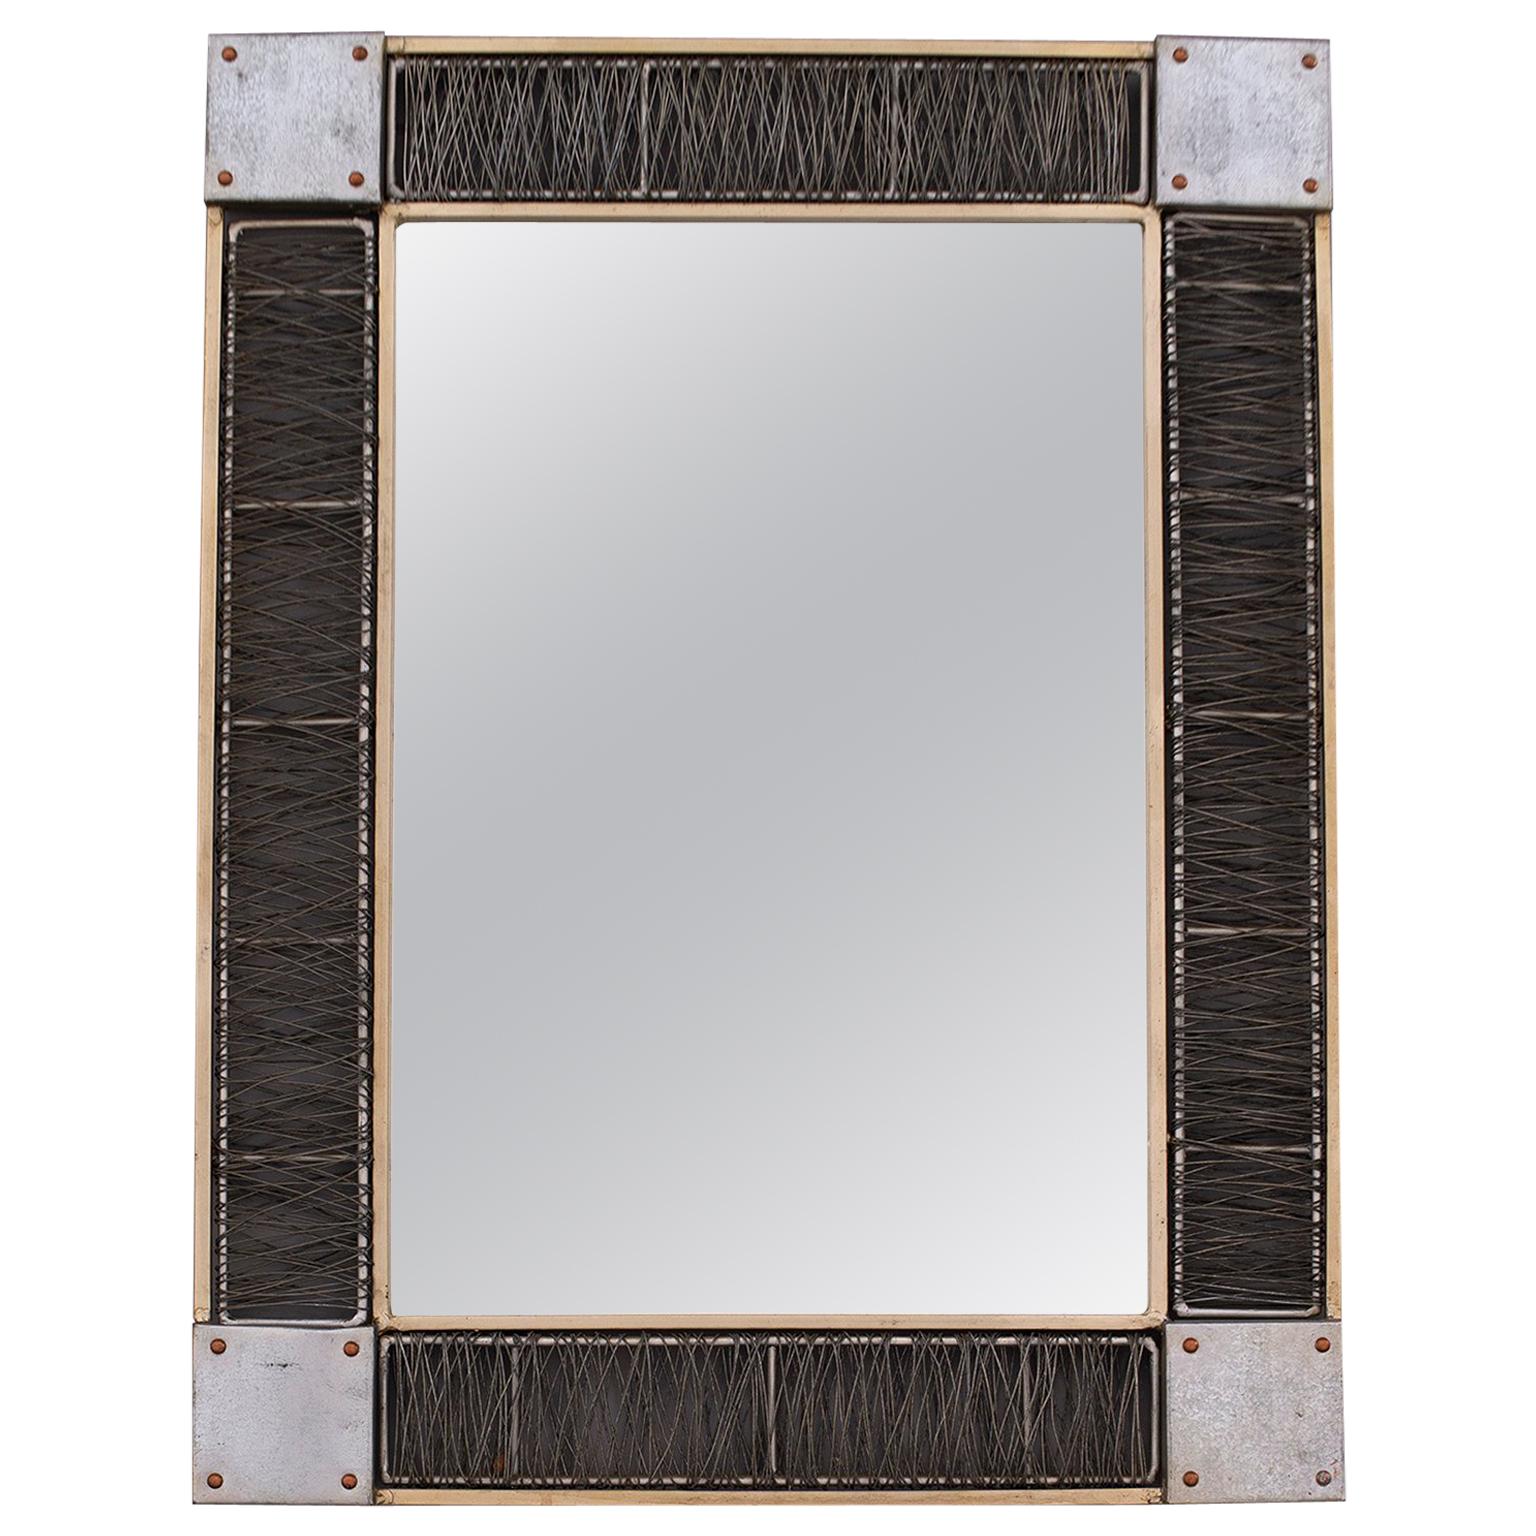 Midcentury Industrial Style Aluminum Framed Mirror